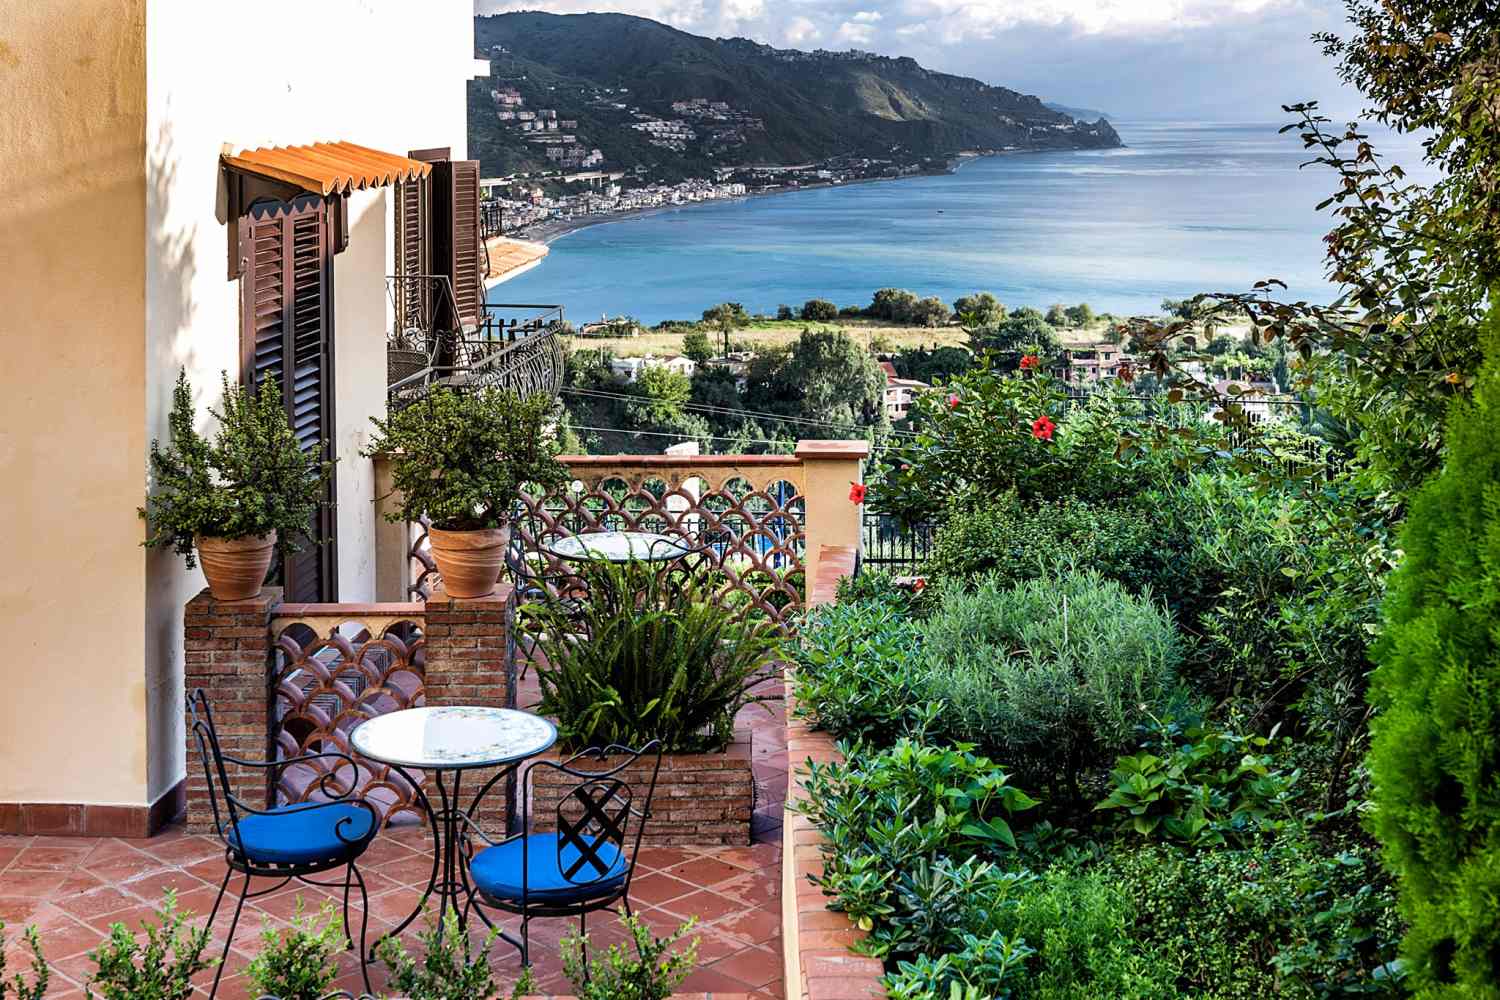 Hotel Sirius Taormina, Sicily - Italy